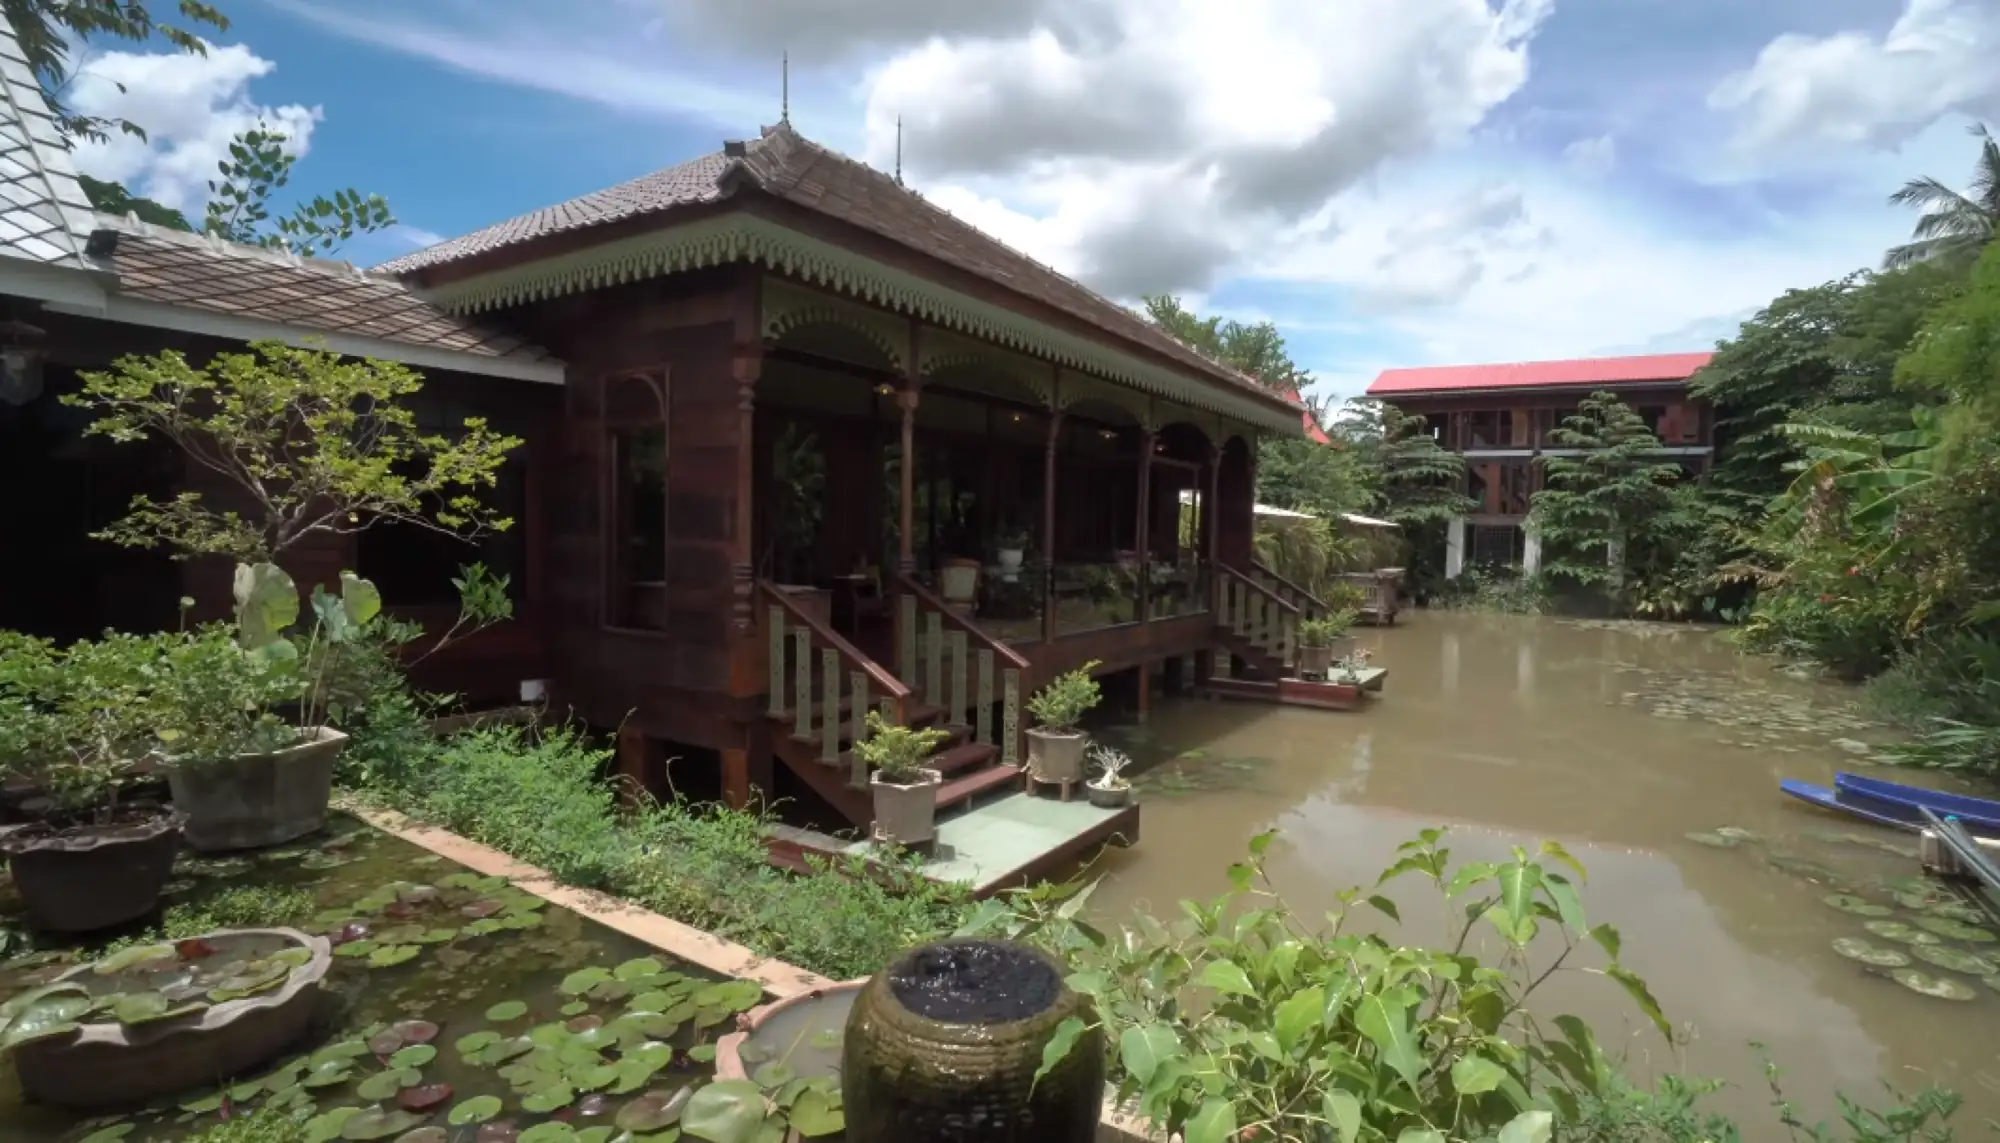 Sipsong Nuaitat汇集了餐厅、咖啡厅、住宿、农场和博物馆于一体（图片来源：sanook）